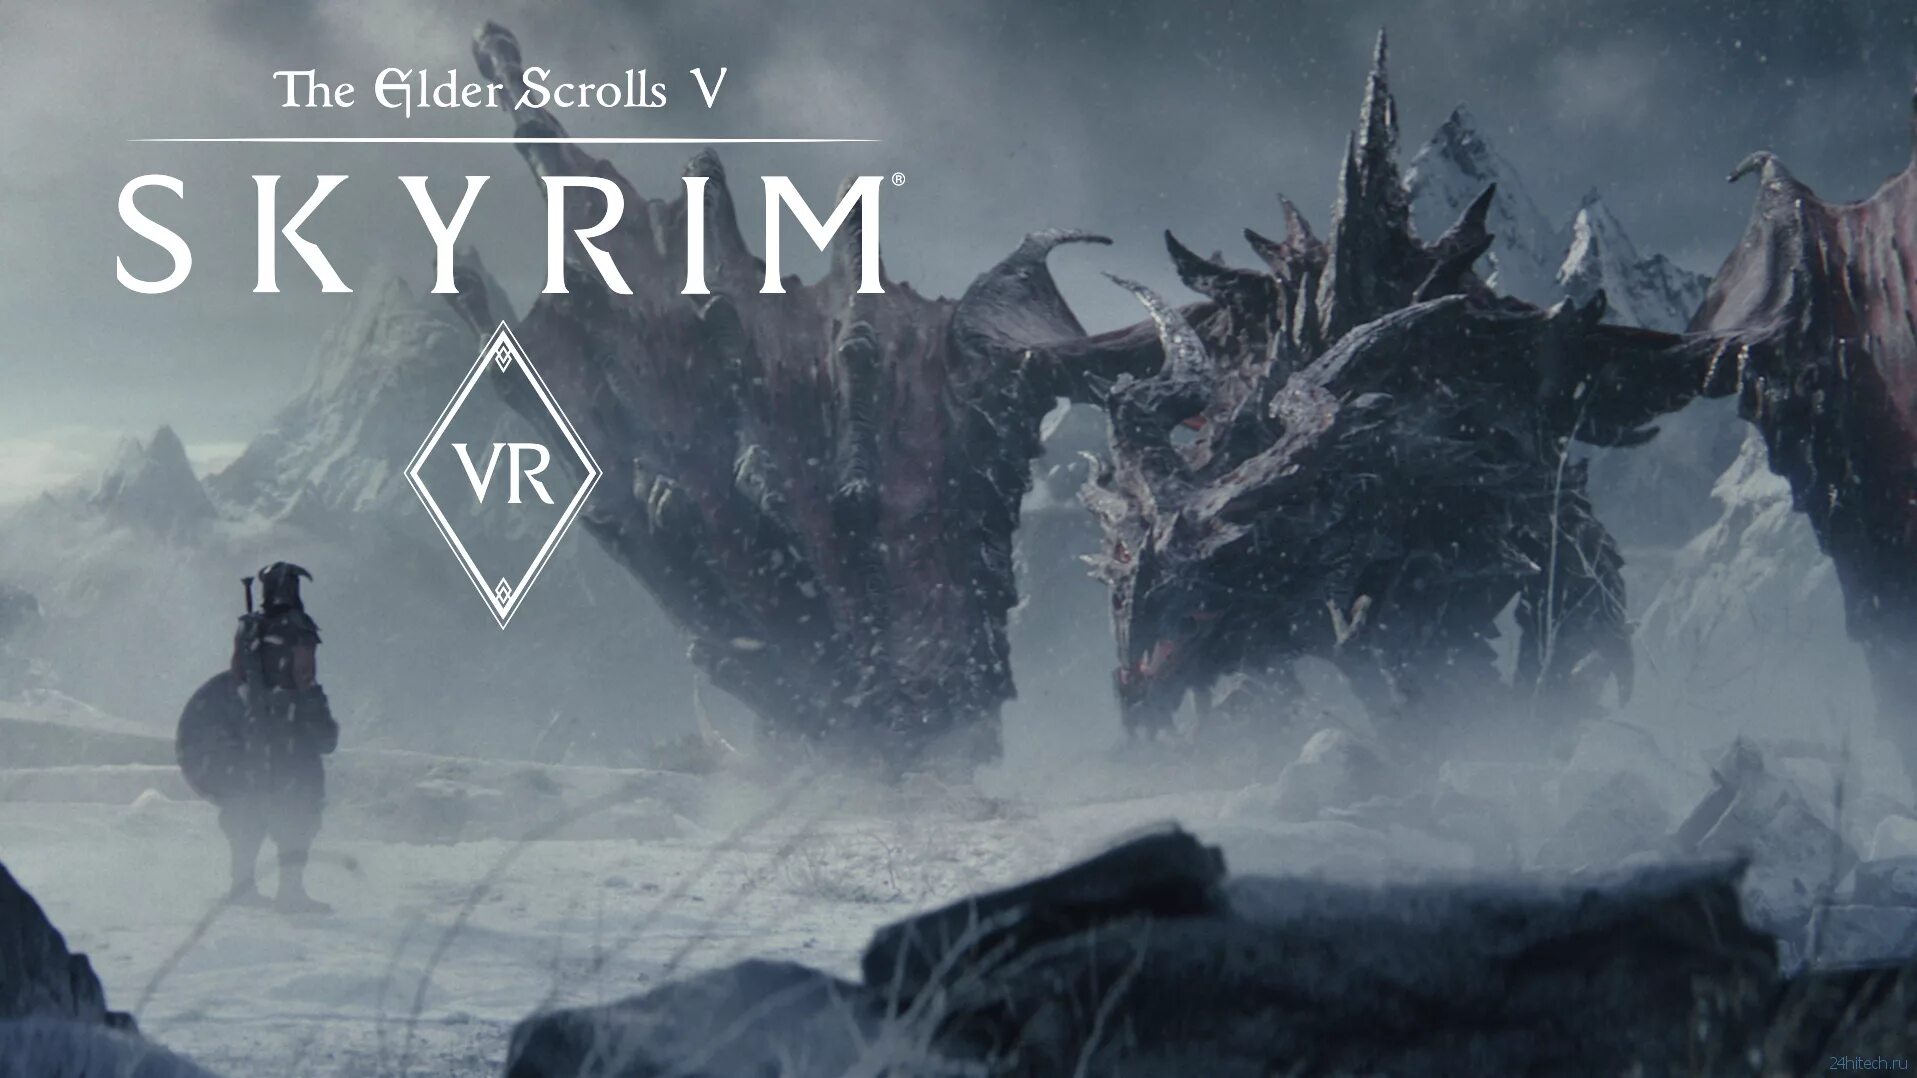 The Elder Scrolls v: Skyrim VR. Игра Skyrim ps4. Скайрим Постер. Обложка Скайрима.